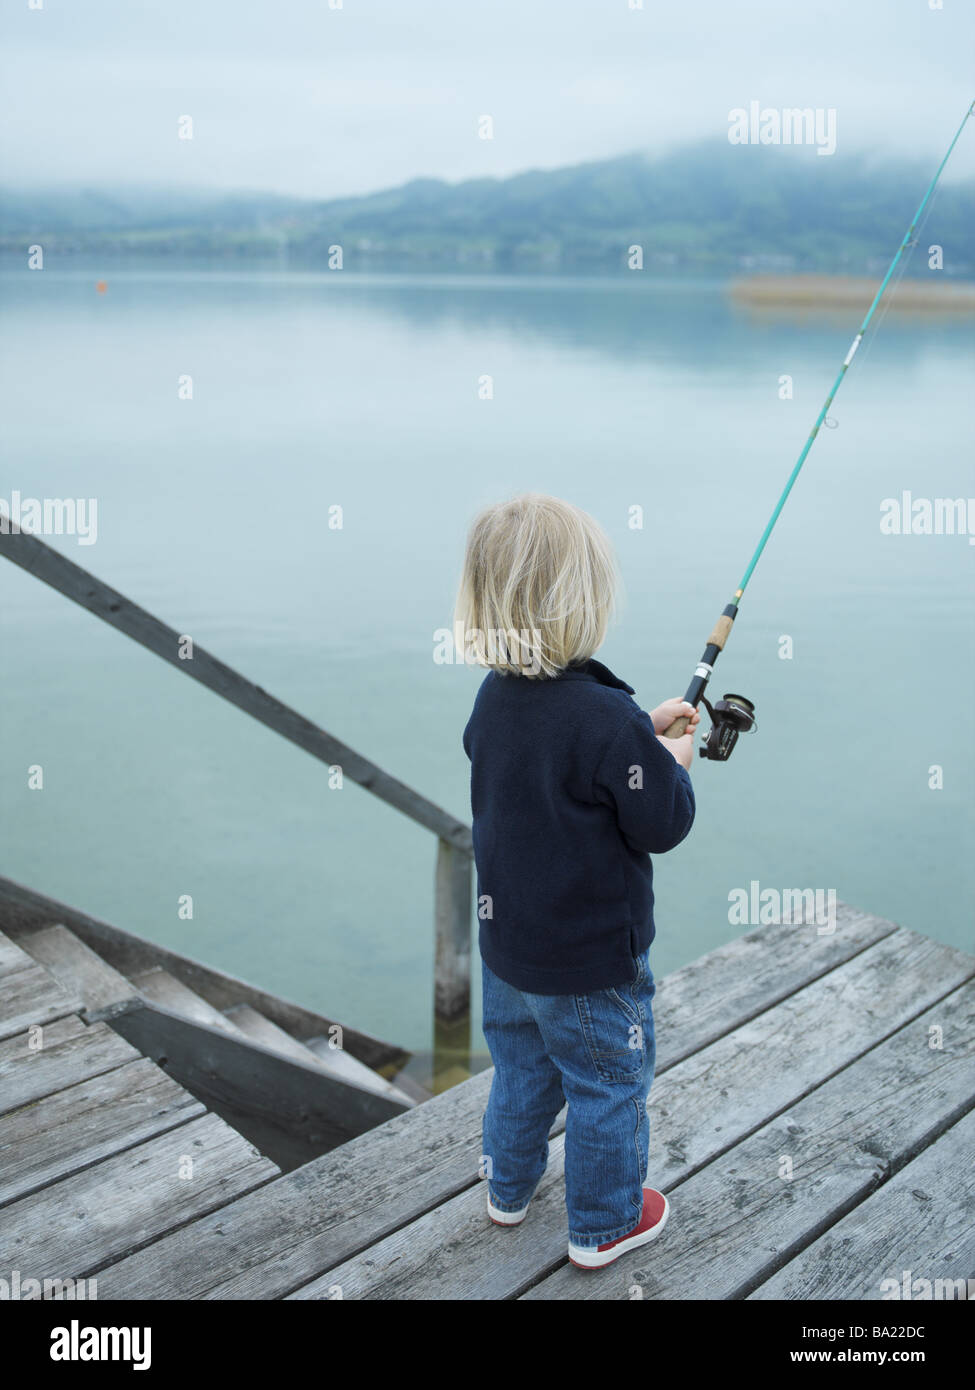 Boy on bridge fishing rod hi-res stock photography and images - Alamy